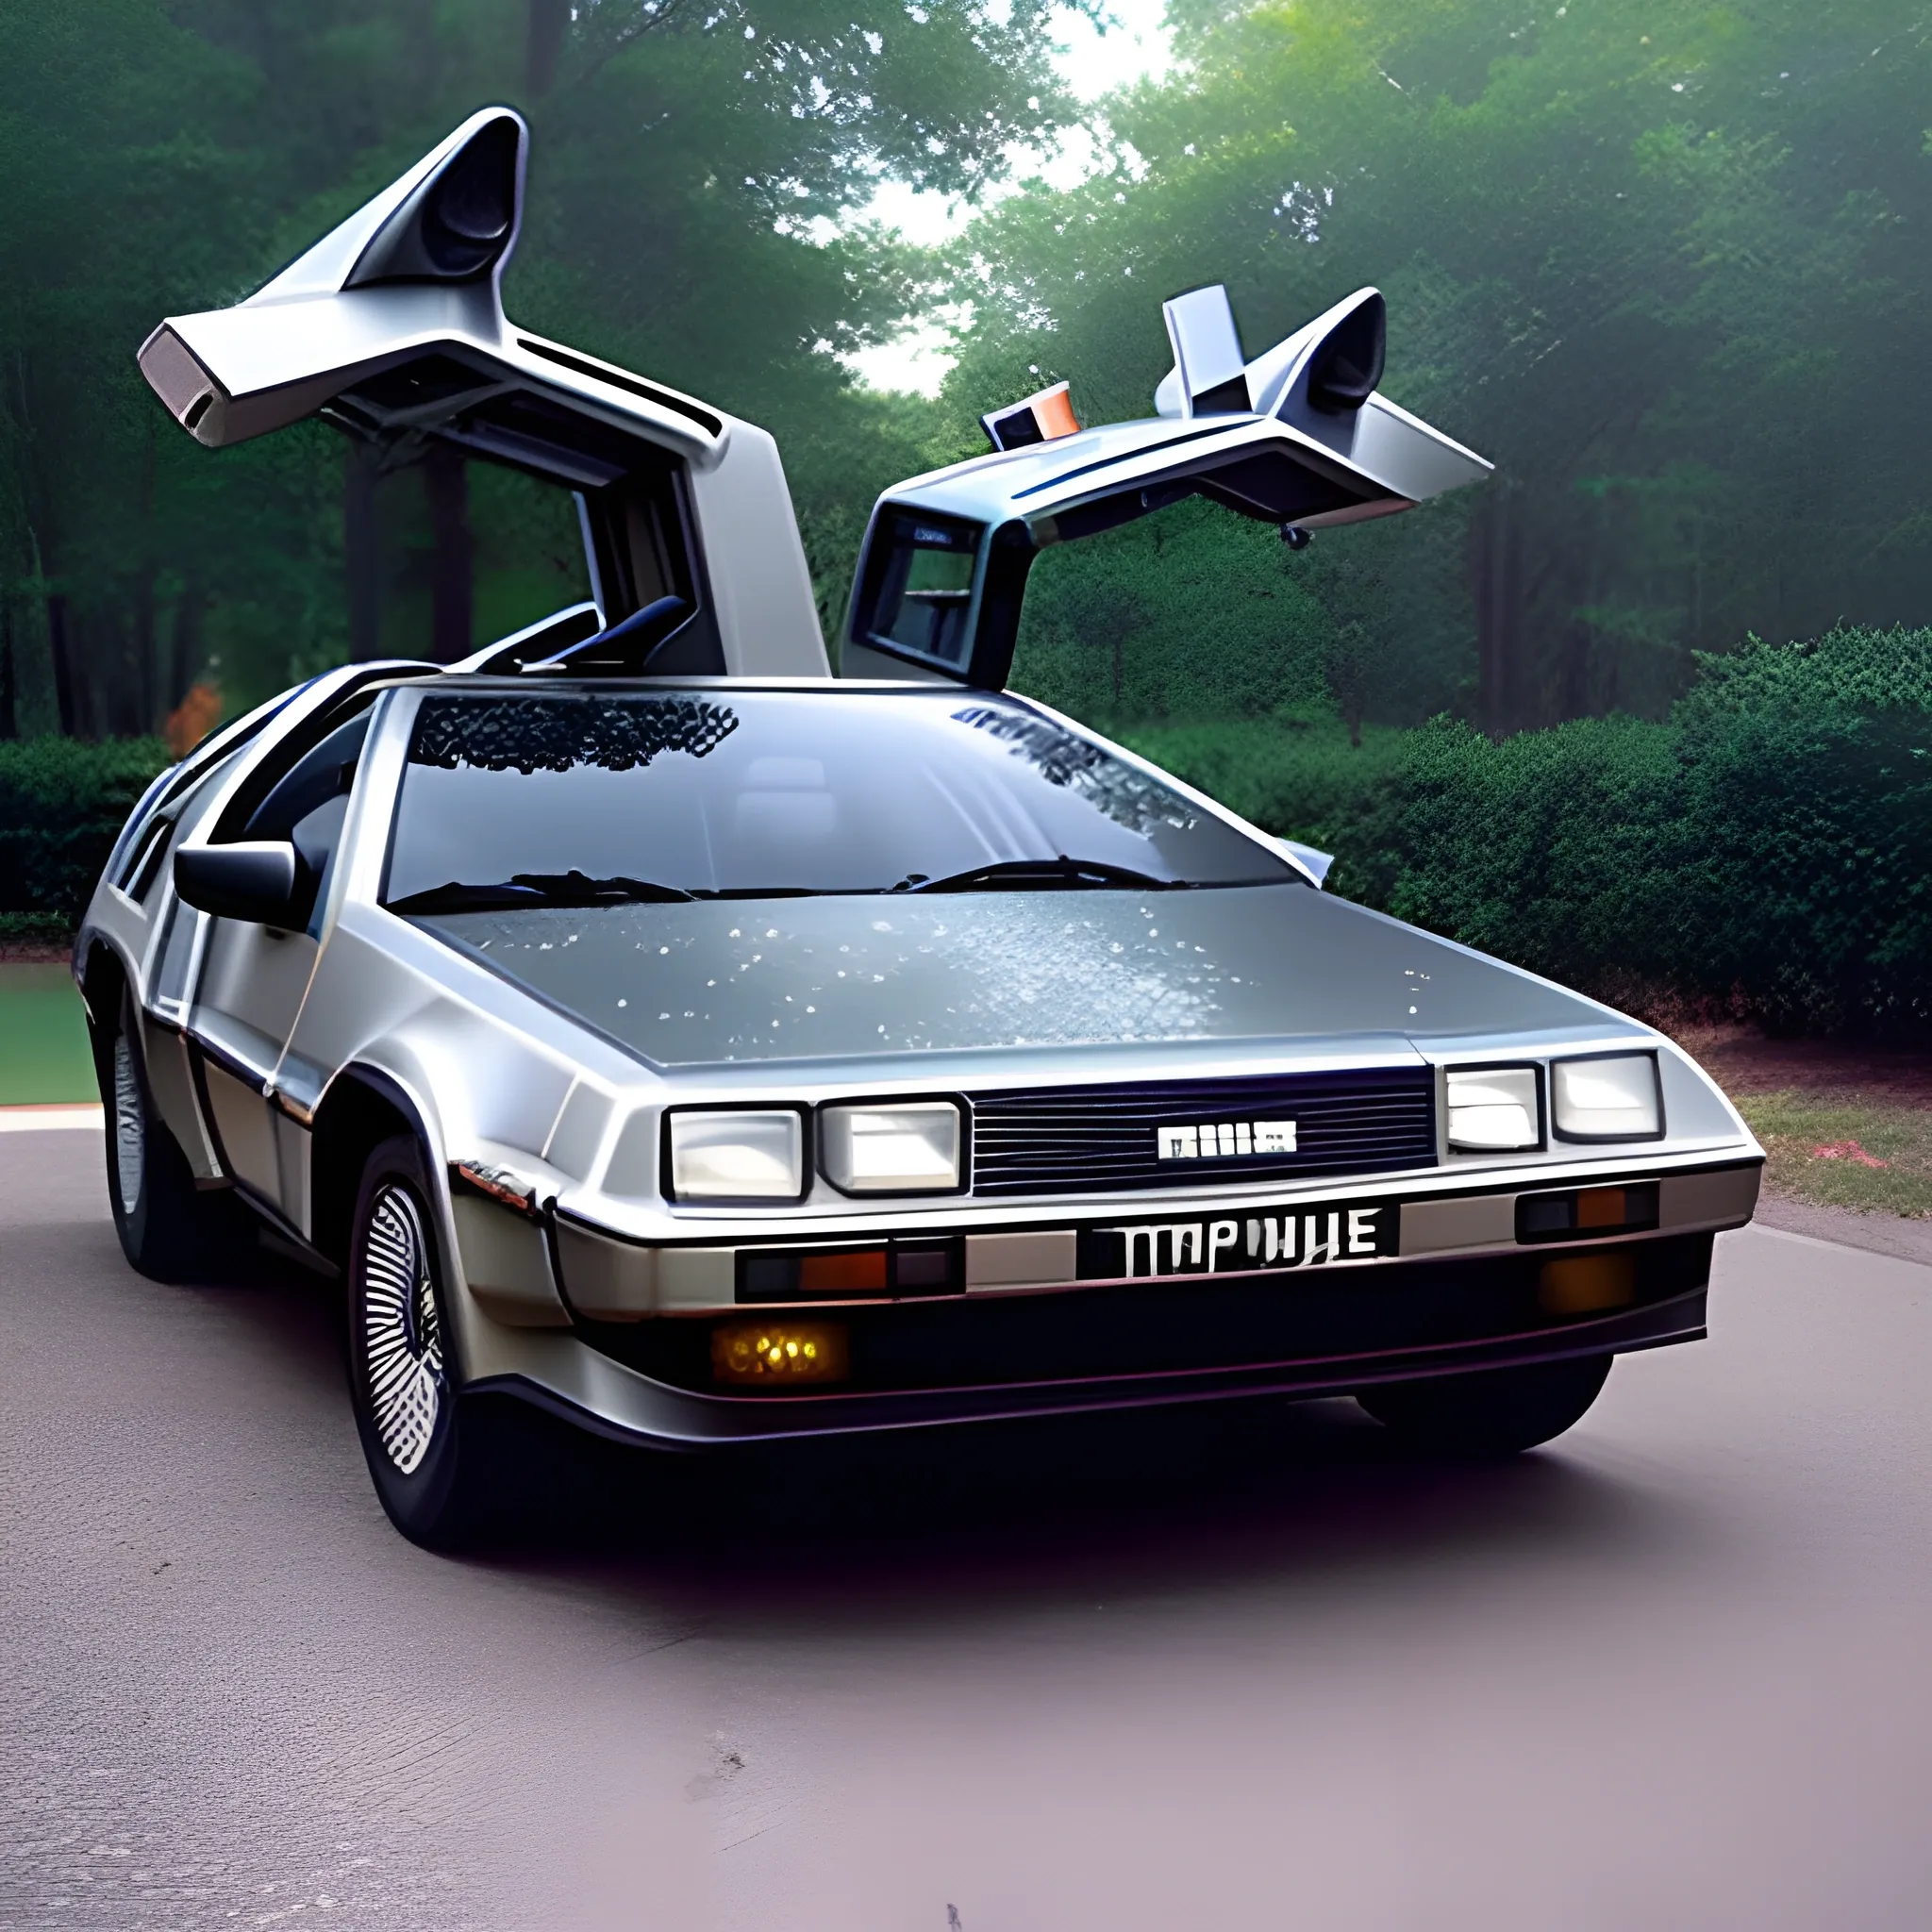 Gray Car Digital Art DeLorean Time Travel Back To The Future Wallpaper   Wallpaperforu